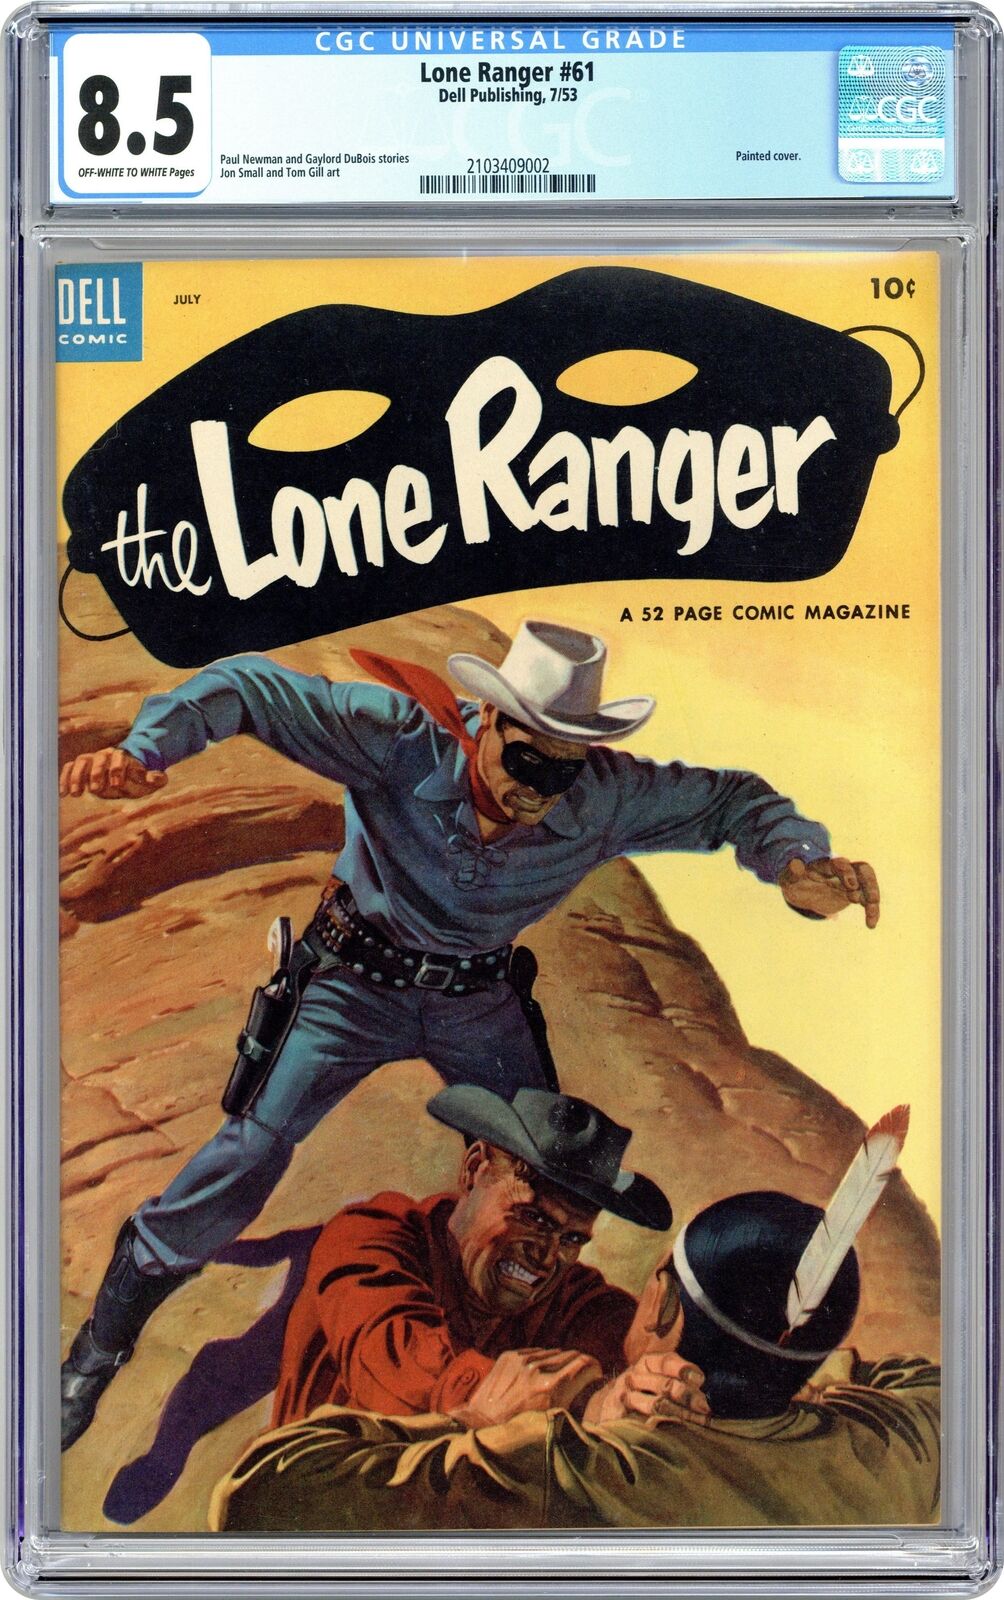 Lone Ranger #61 CGC 8.5 1953 2103409002